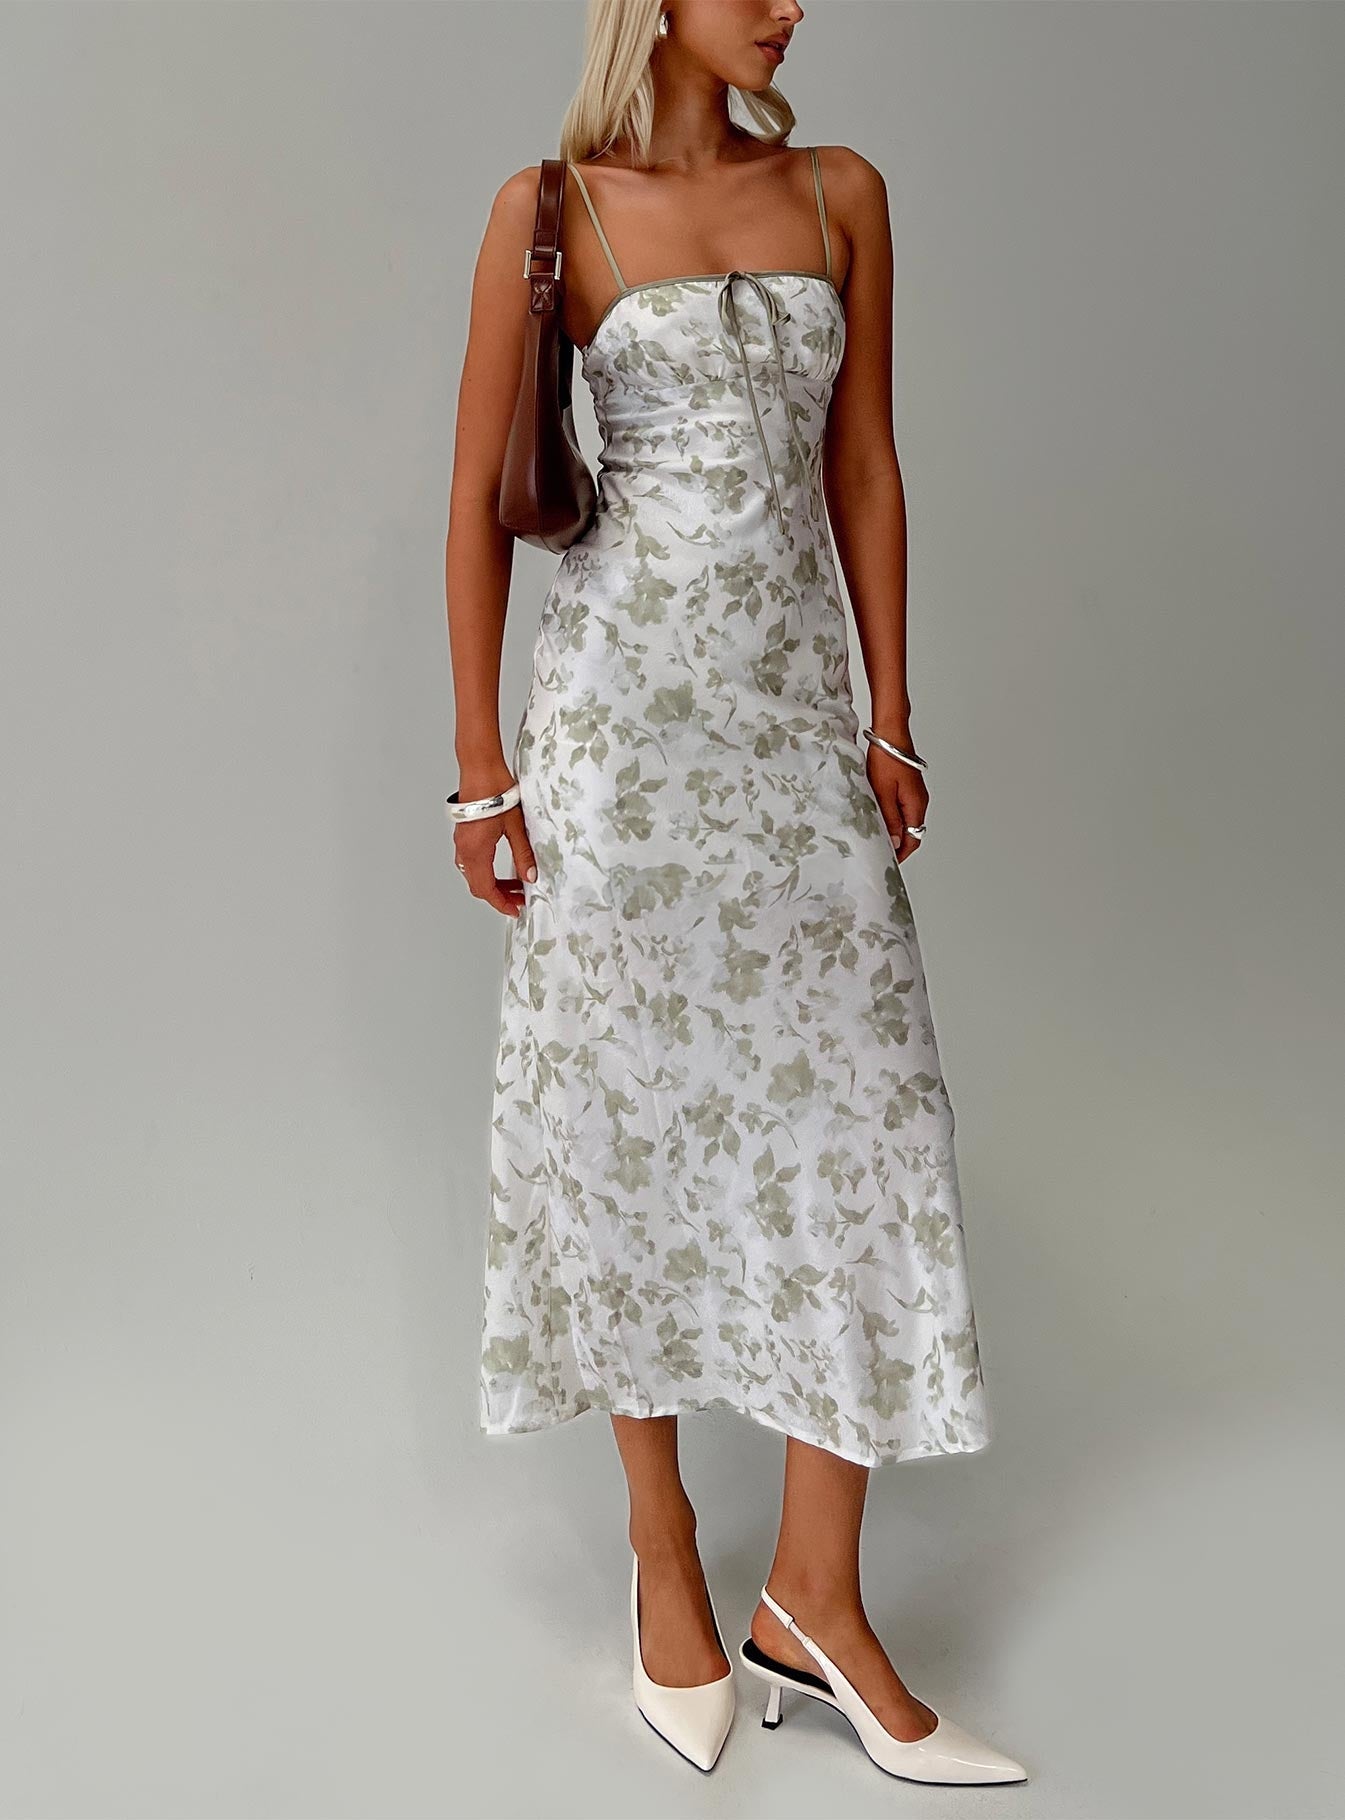 Shop Formal Dress - Vasiliki Maxi Dress White / Green Floral fourth image